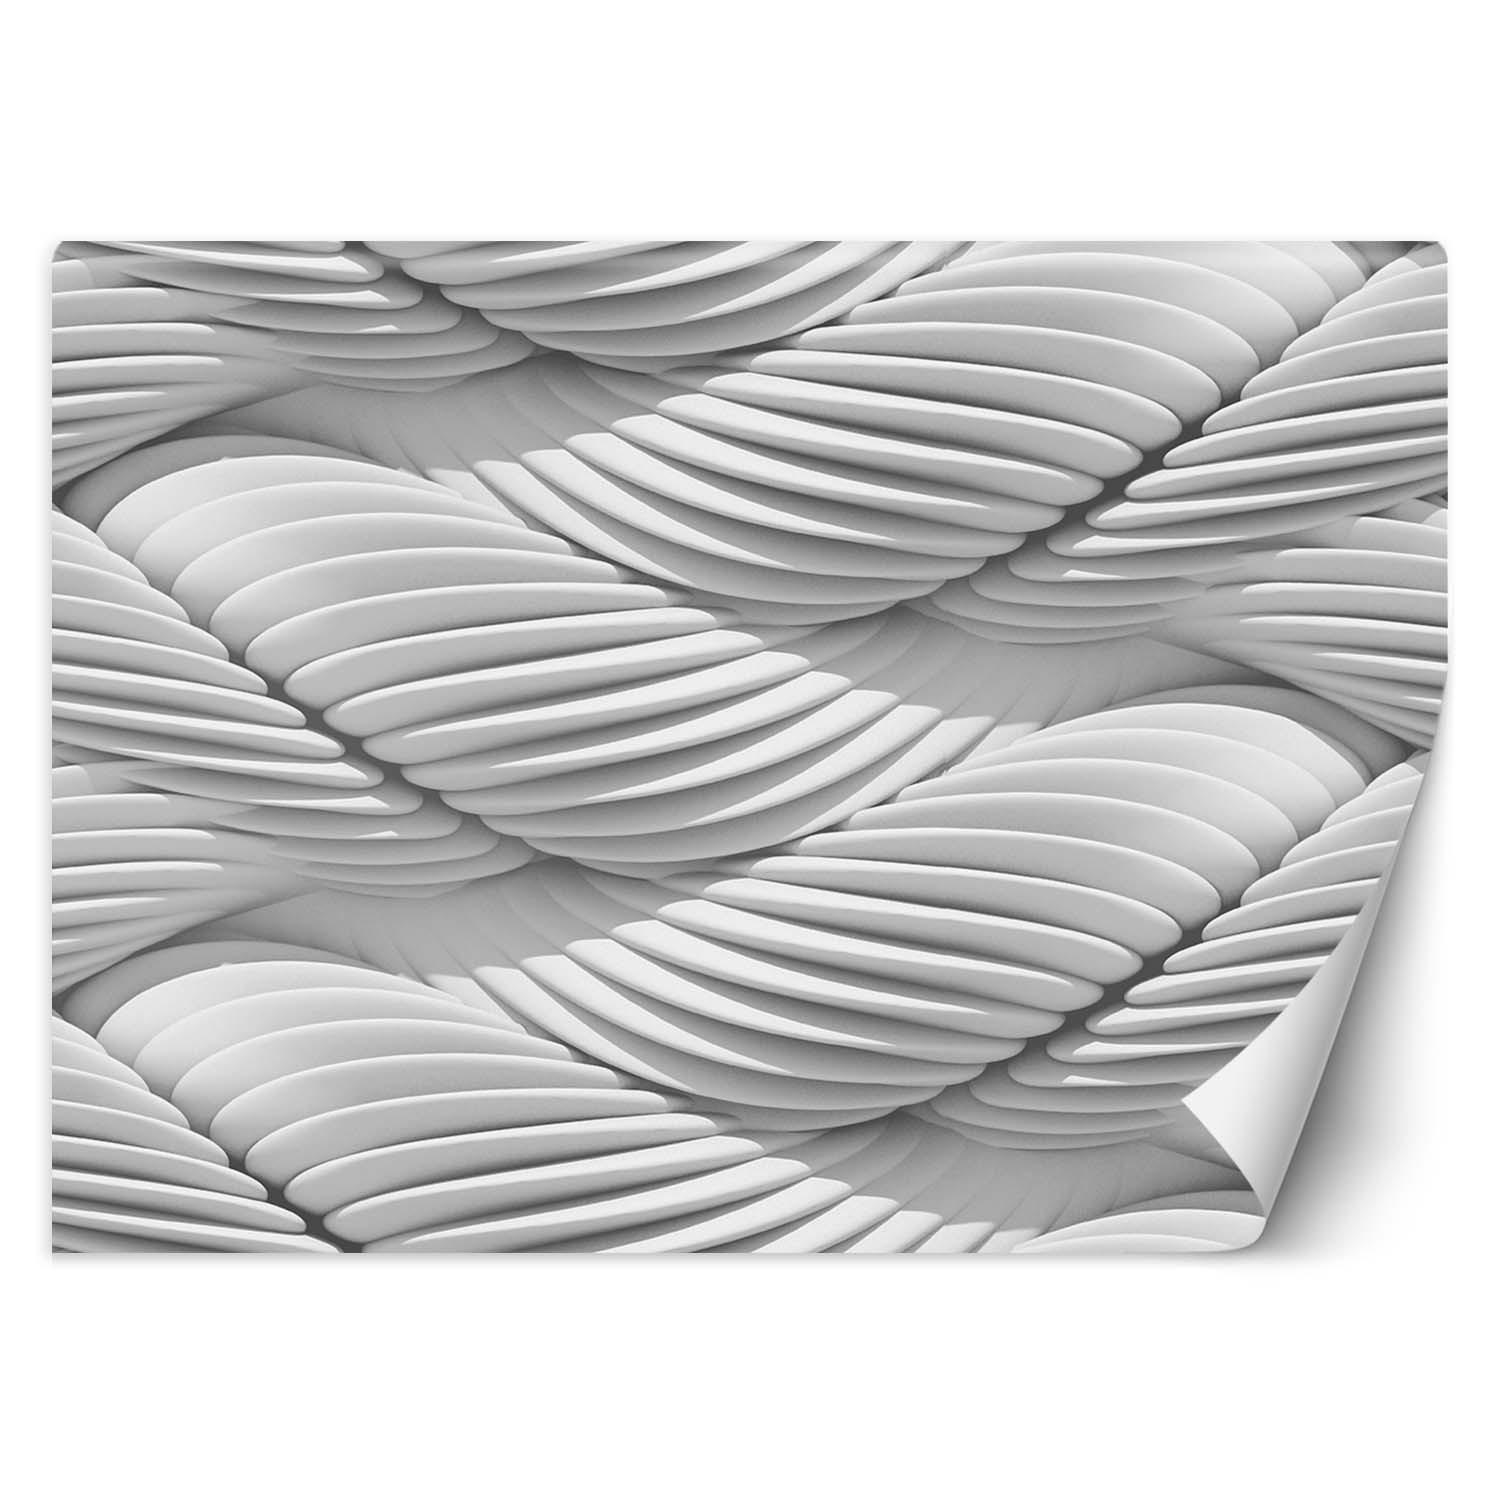 Trend24 – Behang – Abstracte Golven 3D – Behangpapier – Fotobehang 3D – Behang Woonkamer – 450x315x2 cm – Incl. behanglijm